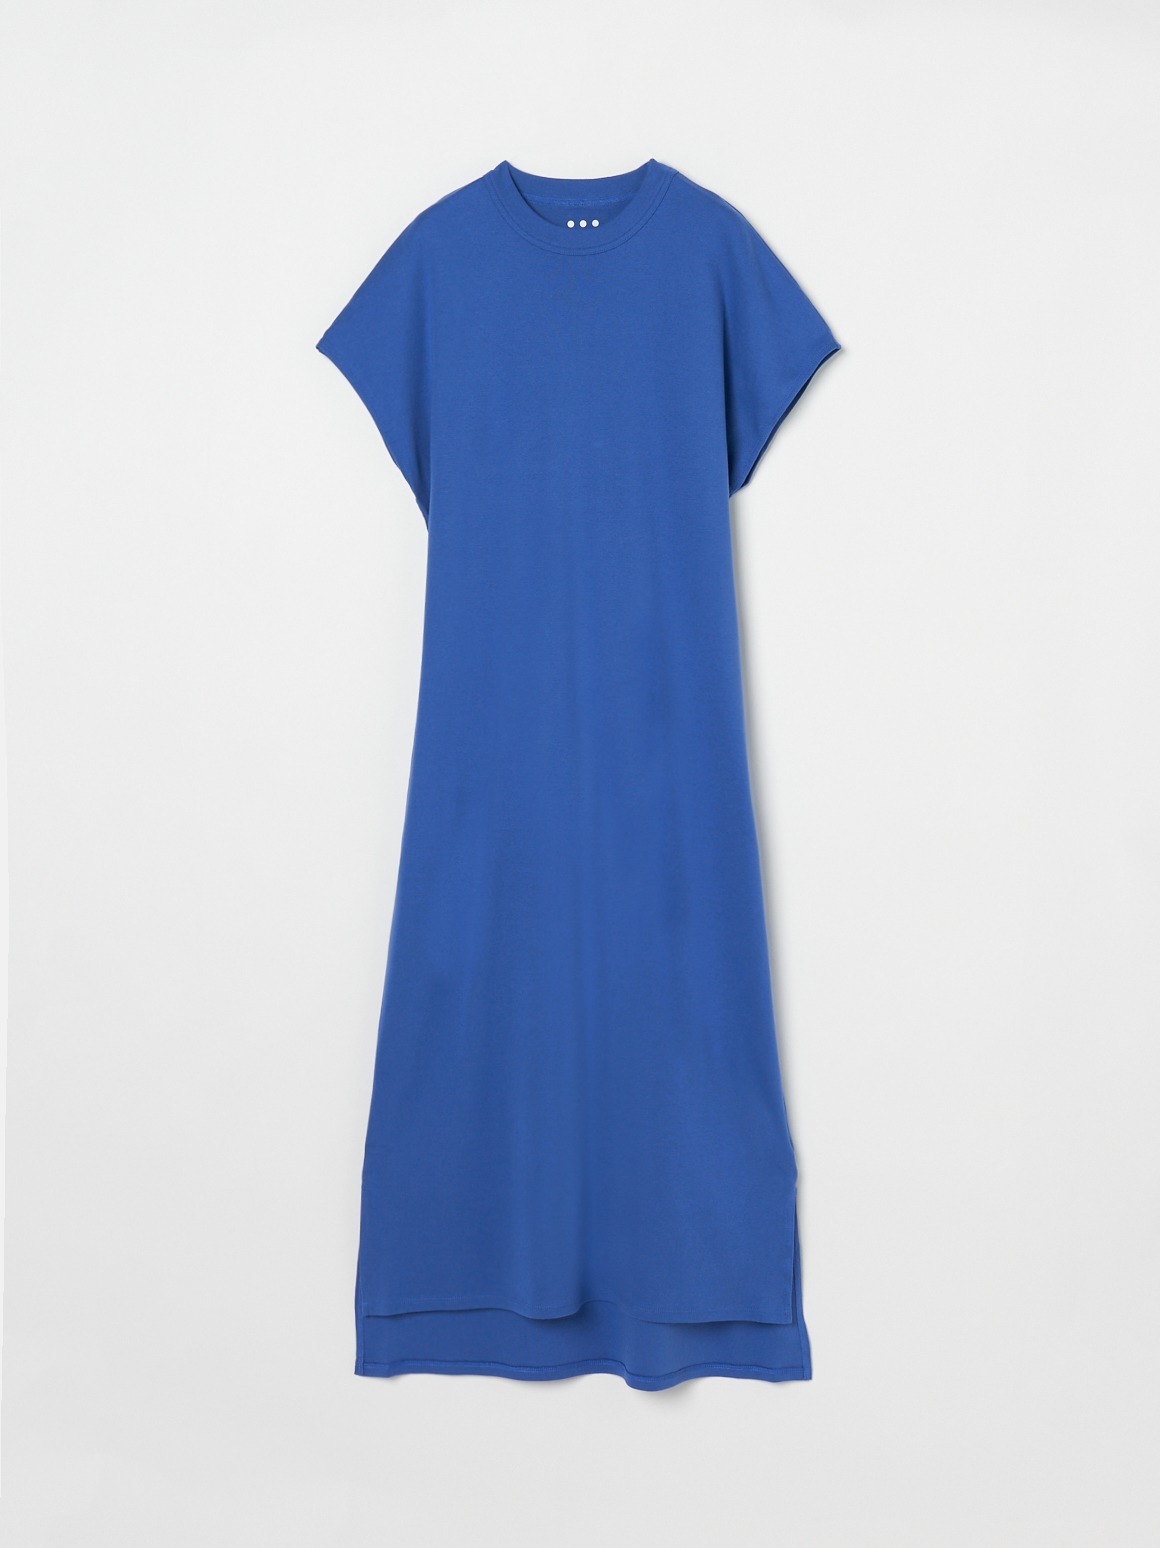 x RIKACO Organic cotton knit Tshirt dress 詳細画像 surf blue 2